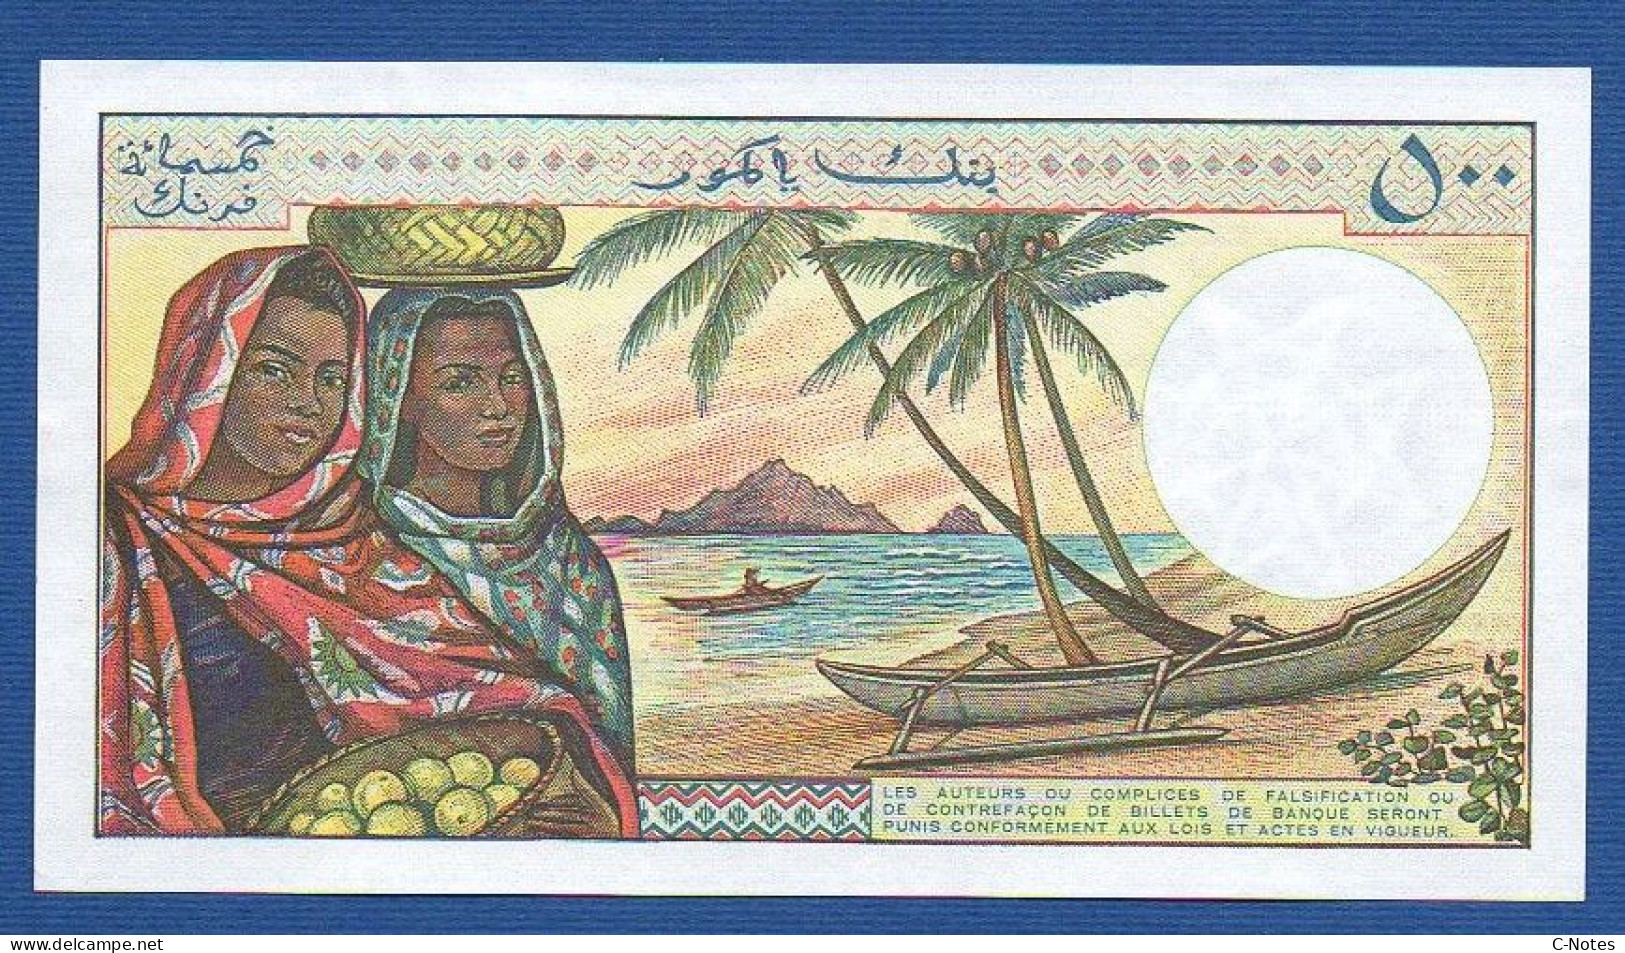 COMOROS - P.10a2 – 500 Francs ND (1984 - 2004) UNC, S/n P.2 74378 - Comore